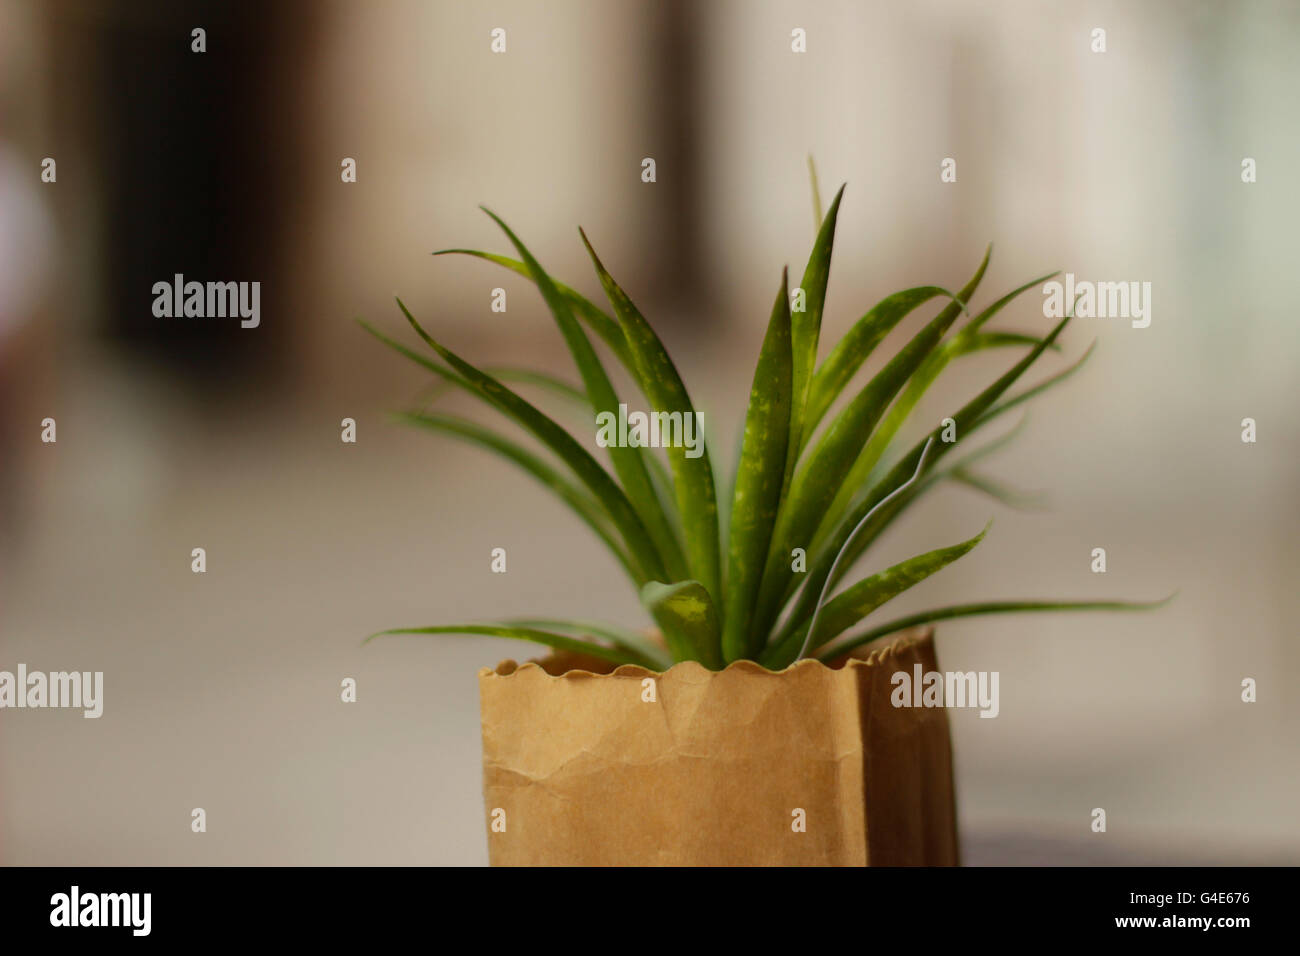 Phoograph of a dwarf shrub plant Stock Photo